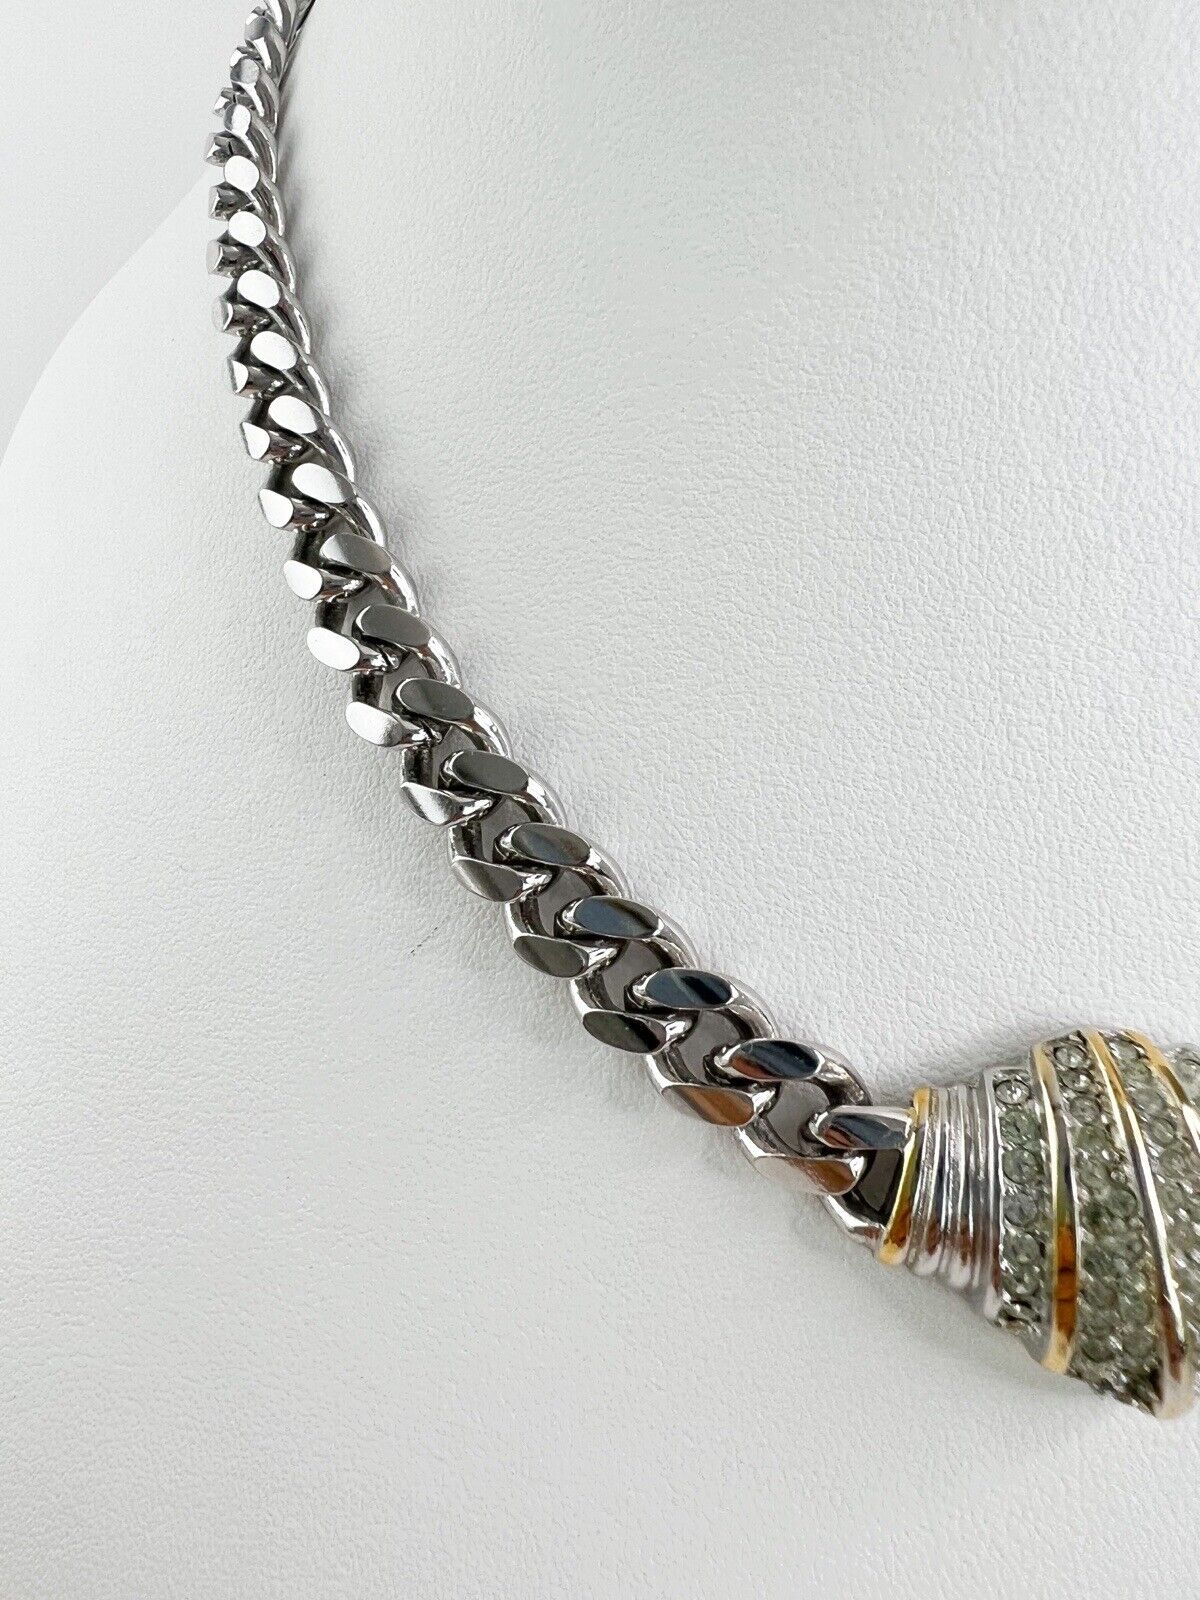 Christian Dior Vintage Necklace Choker Silver